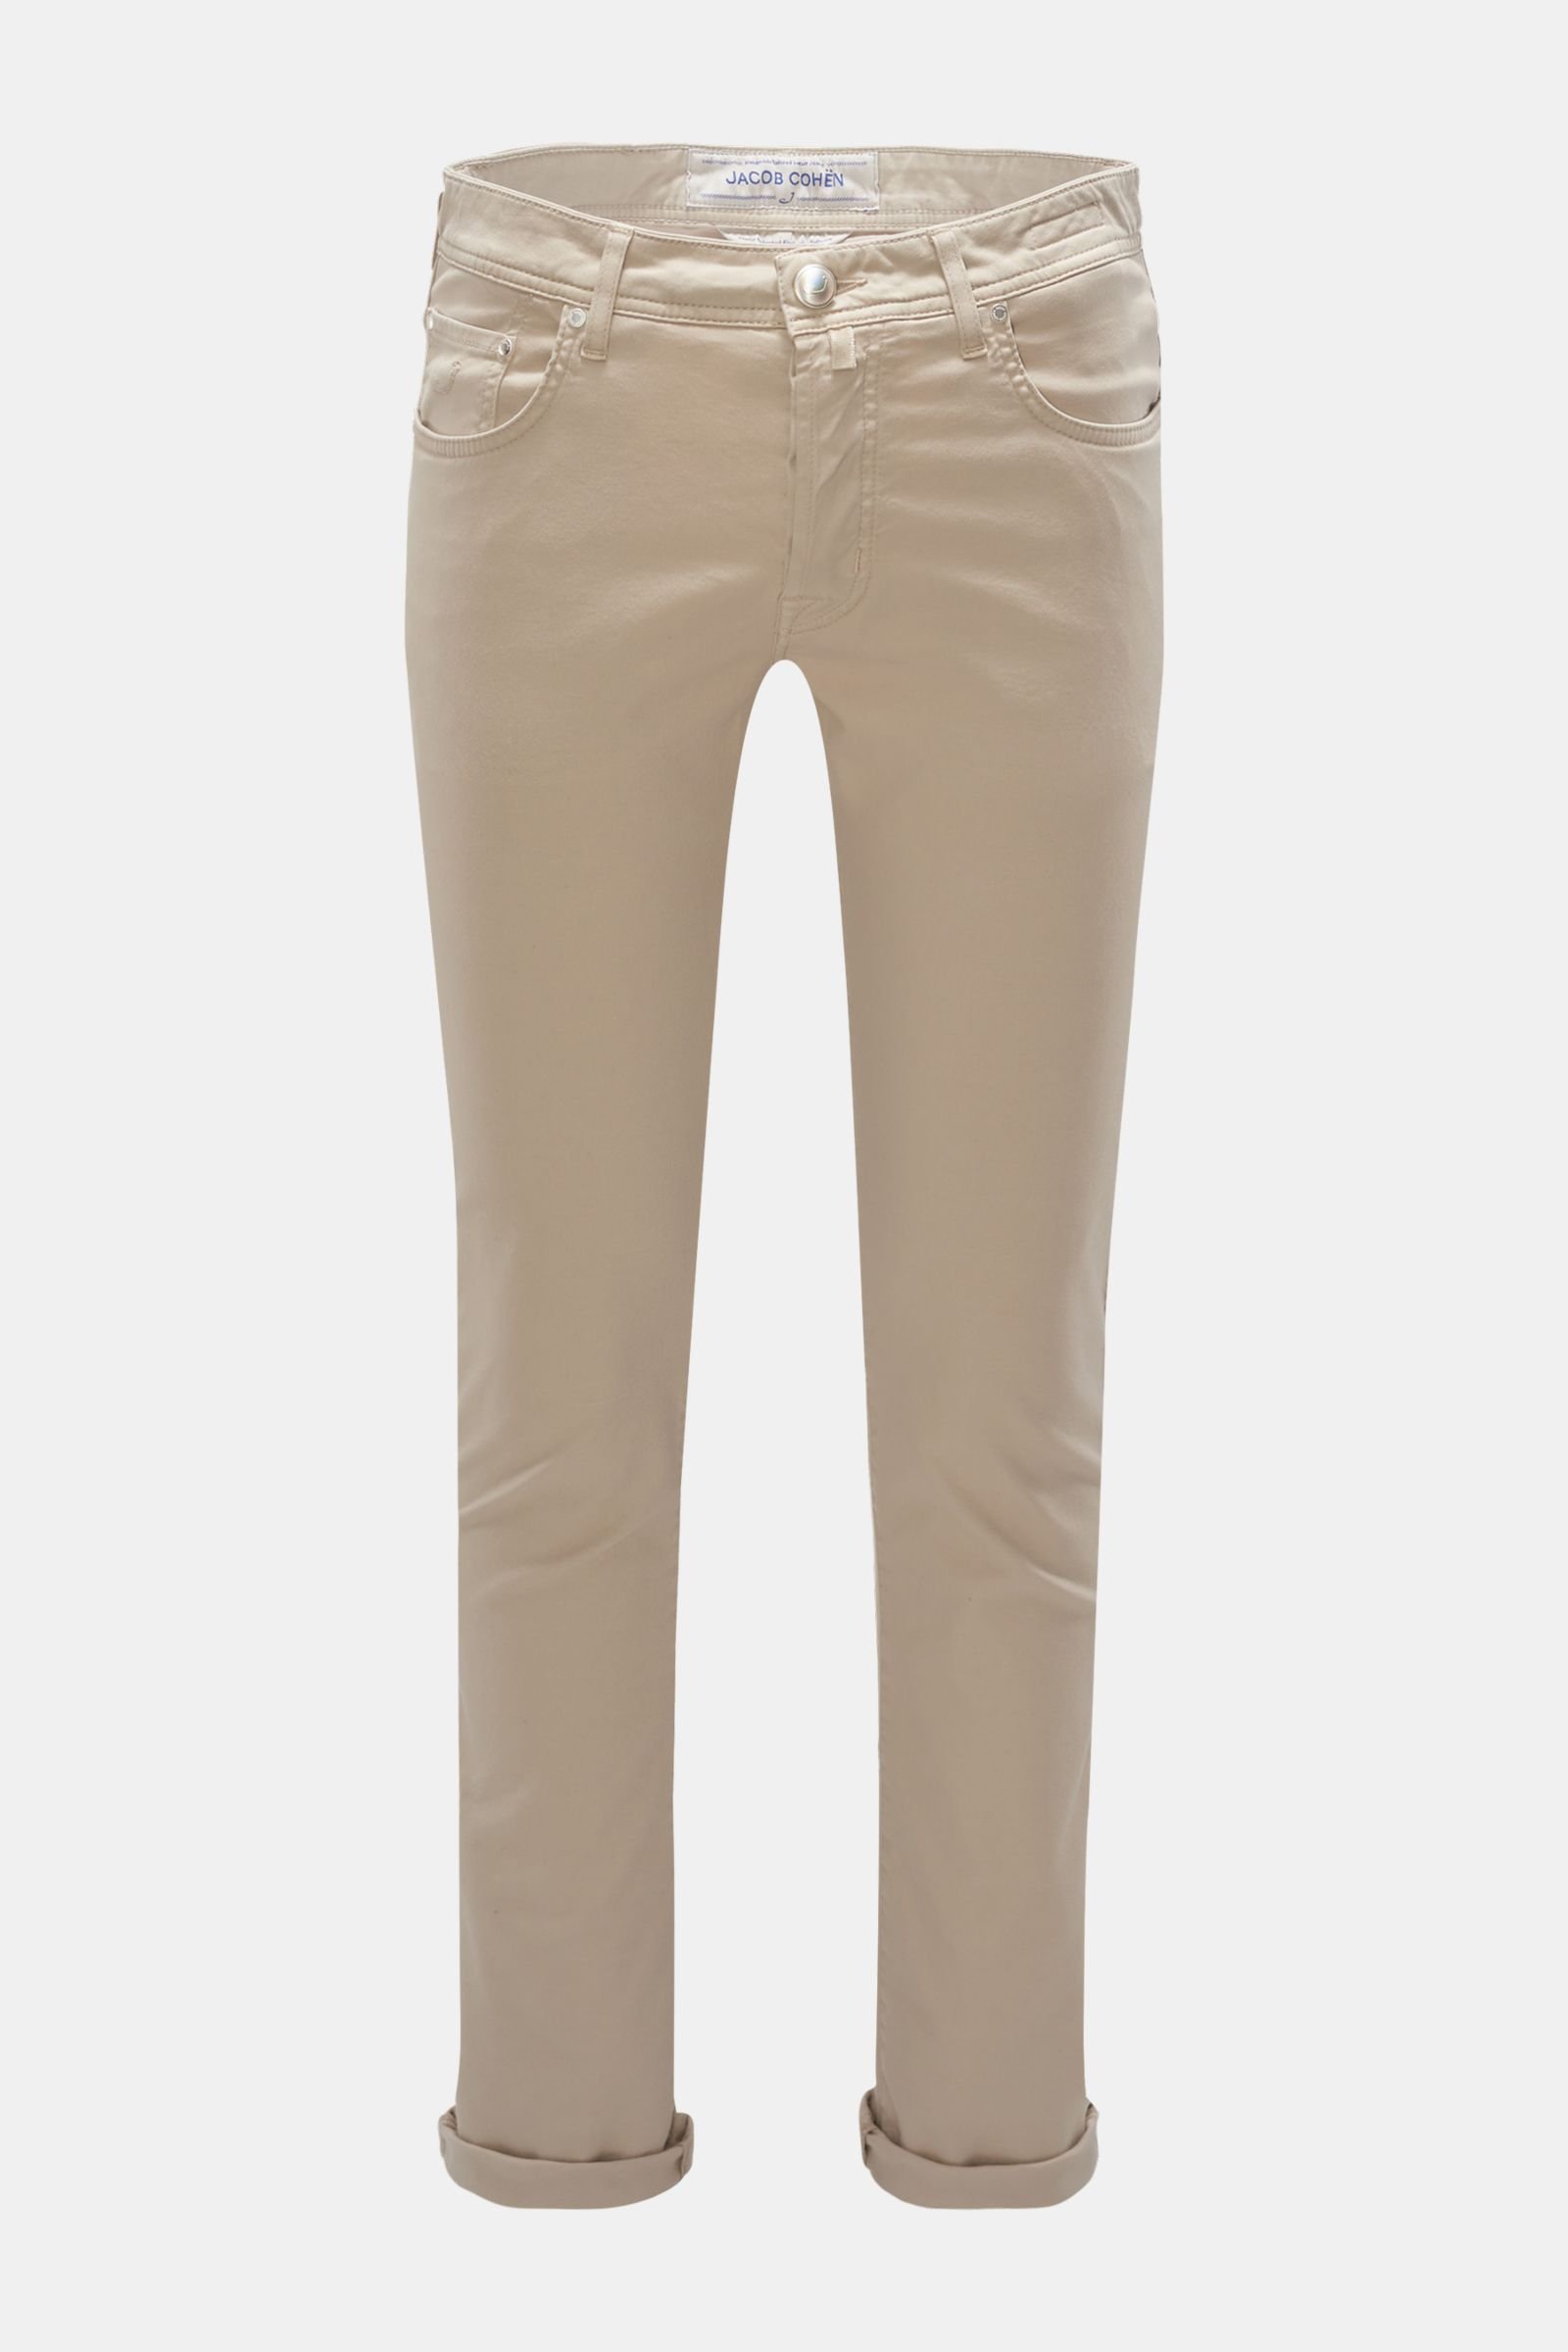 Trousers 'J688 Comfort Extra Slim Fit' beige